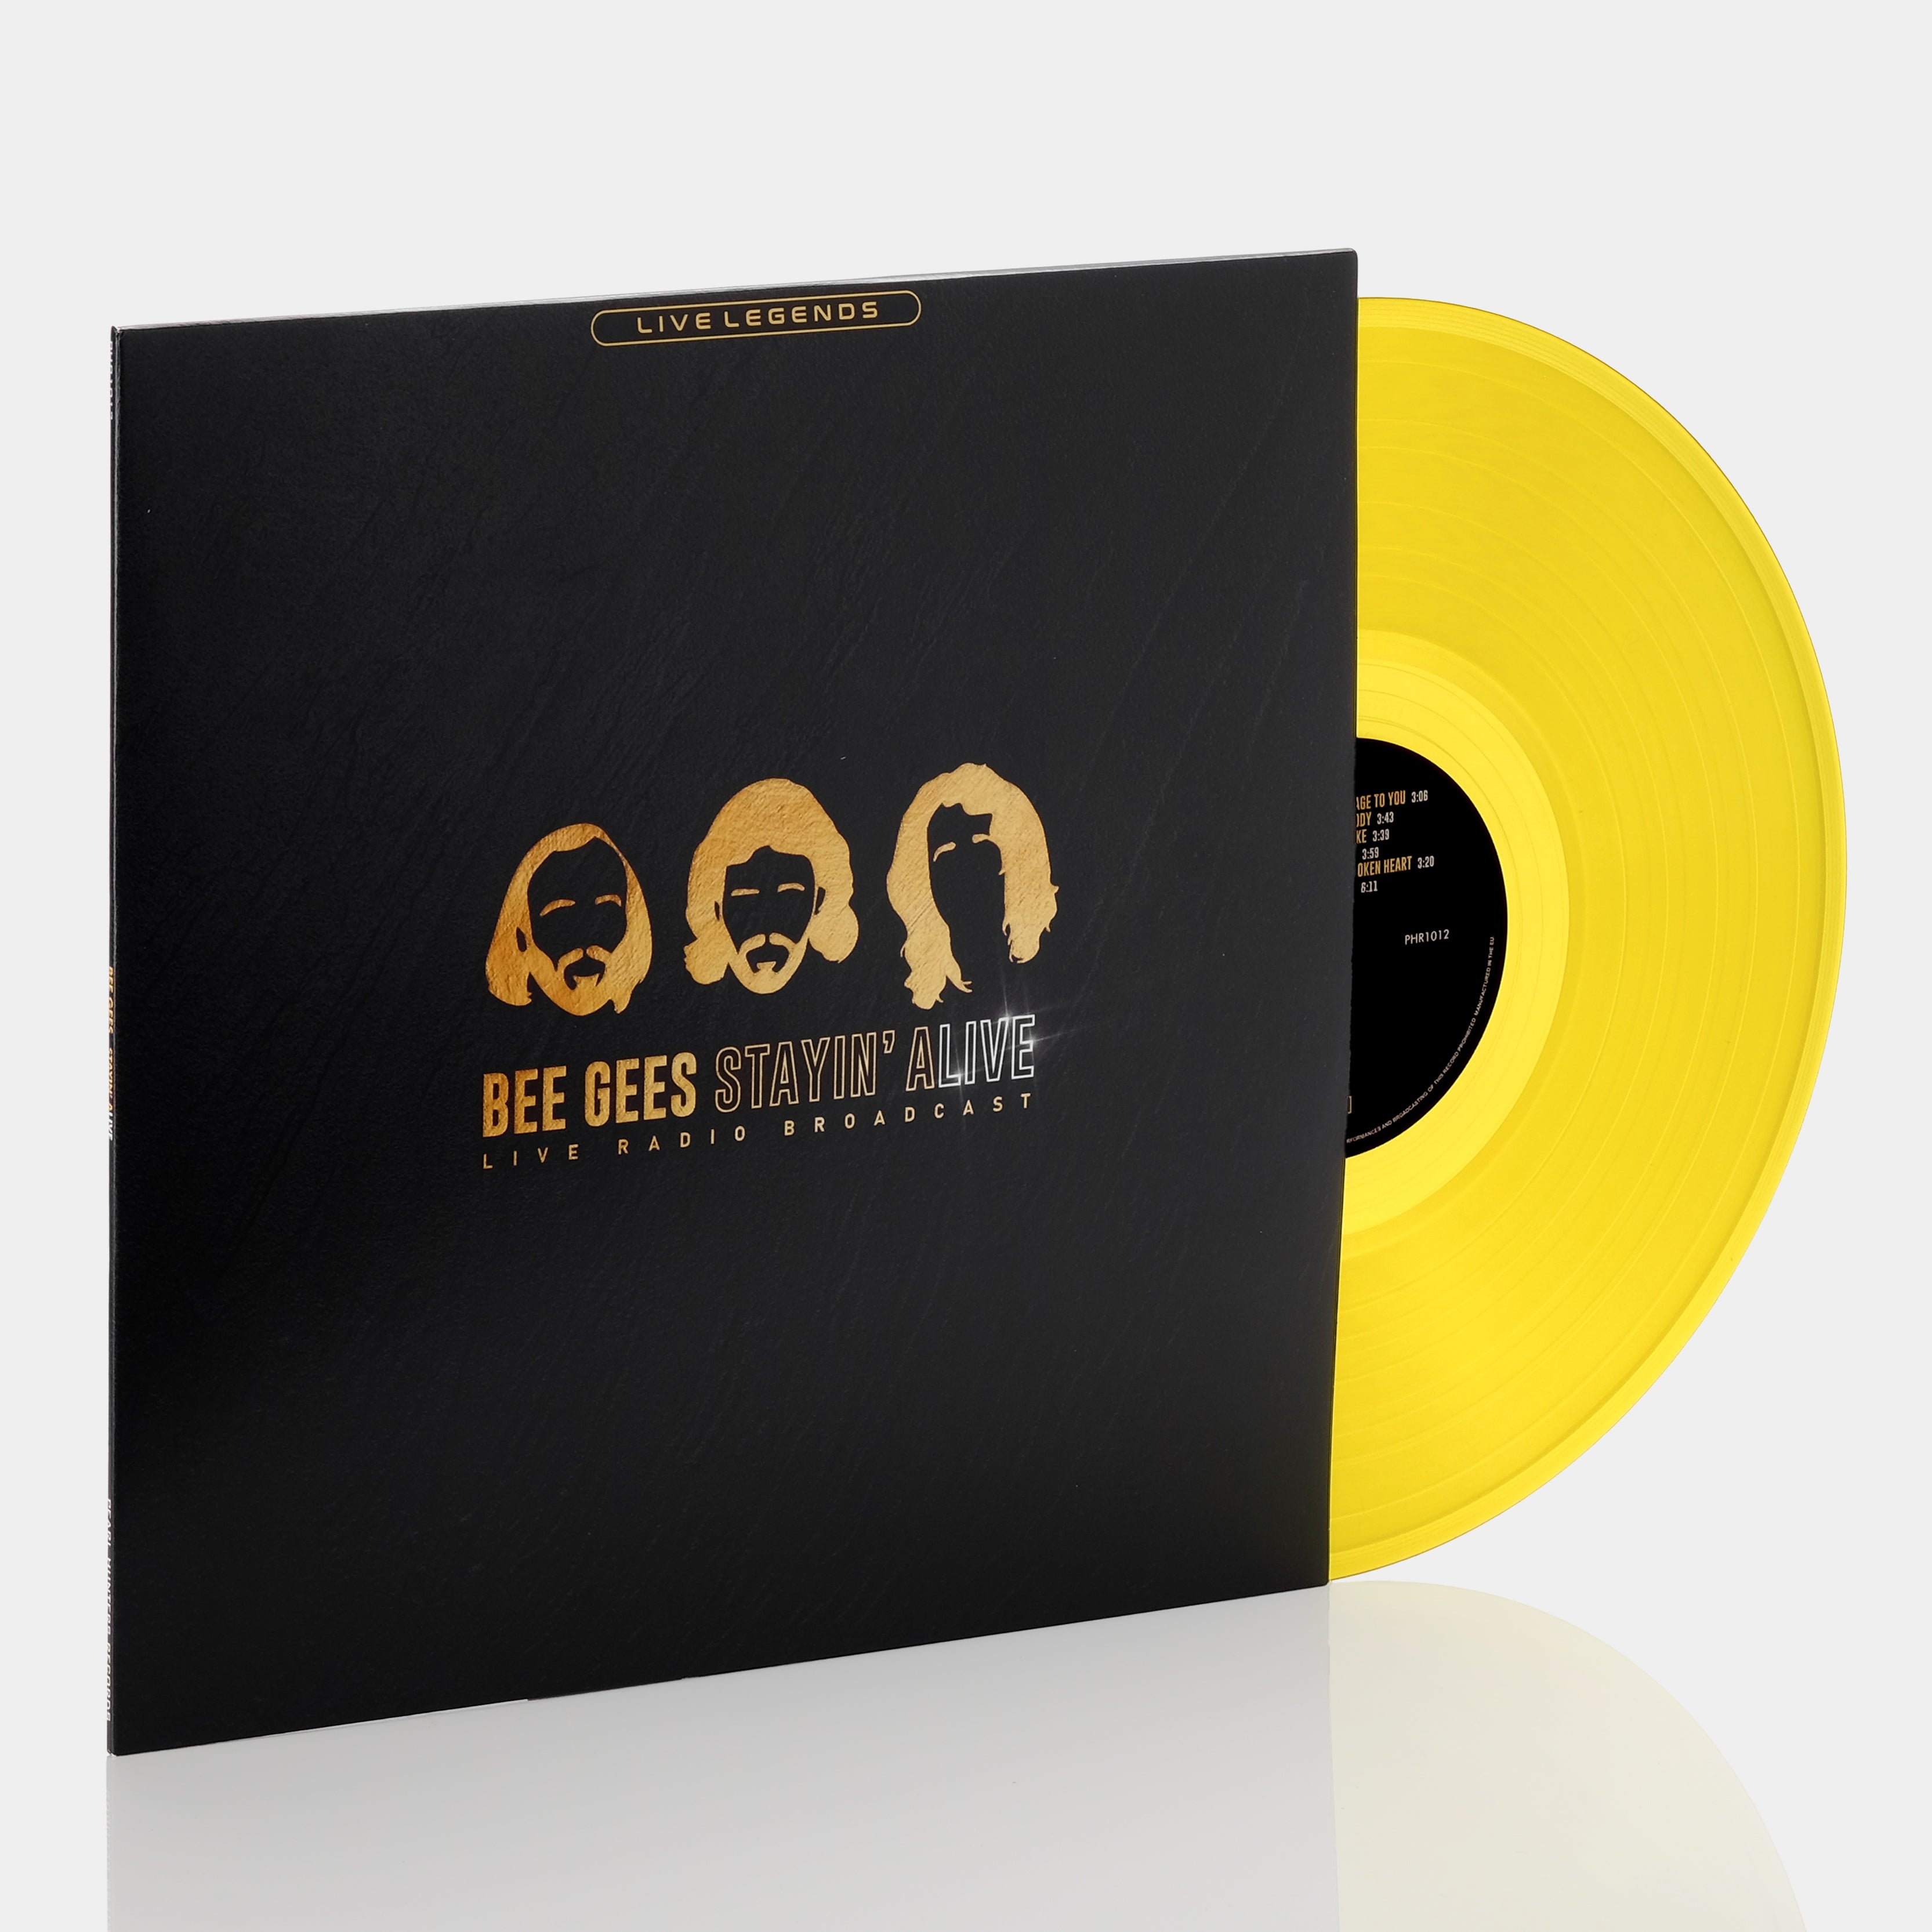 Bee Gees - Stayin' Alive (Live Radio Broadcast) LP Translucent Yellow Vinyl Record